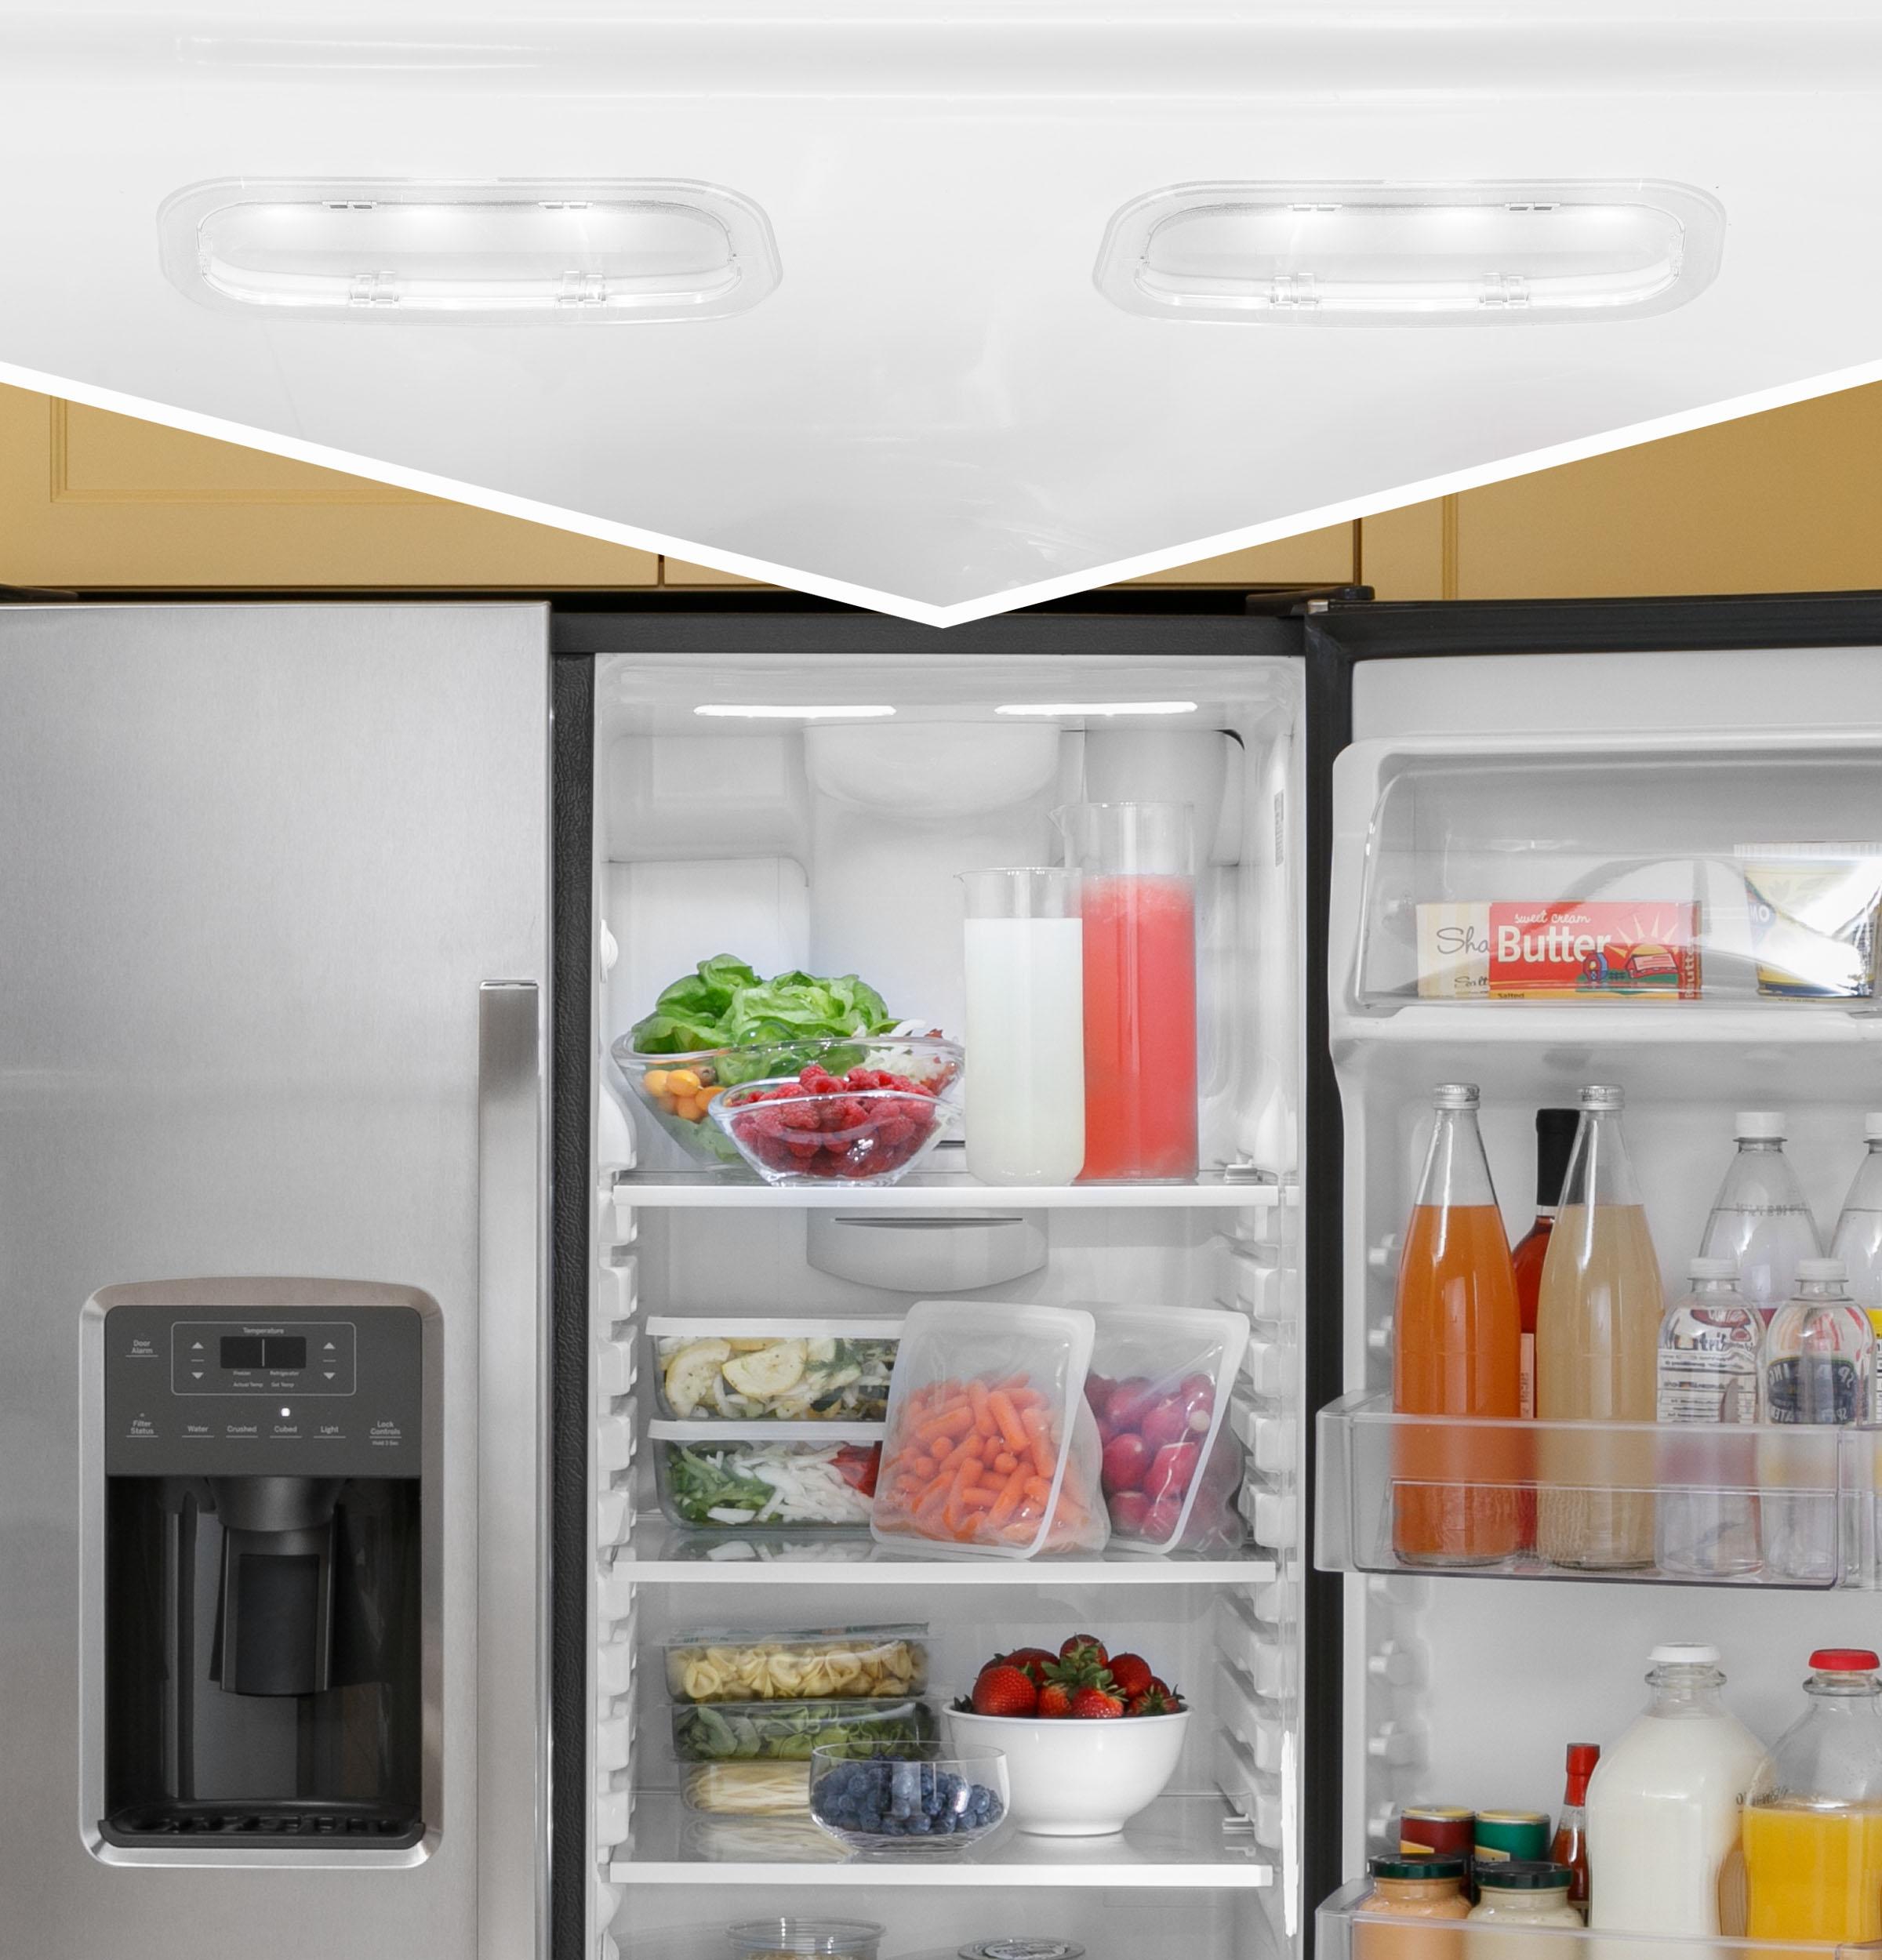 GE® ENERGY STAR® 25.3 Cu. Ft. Side-By-Side Refrigerator